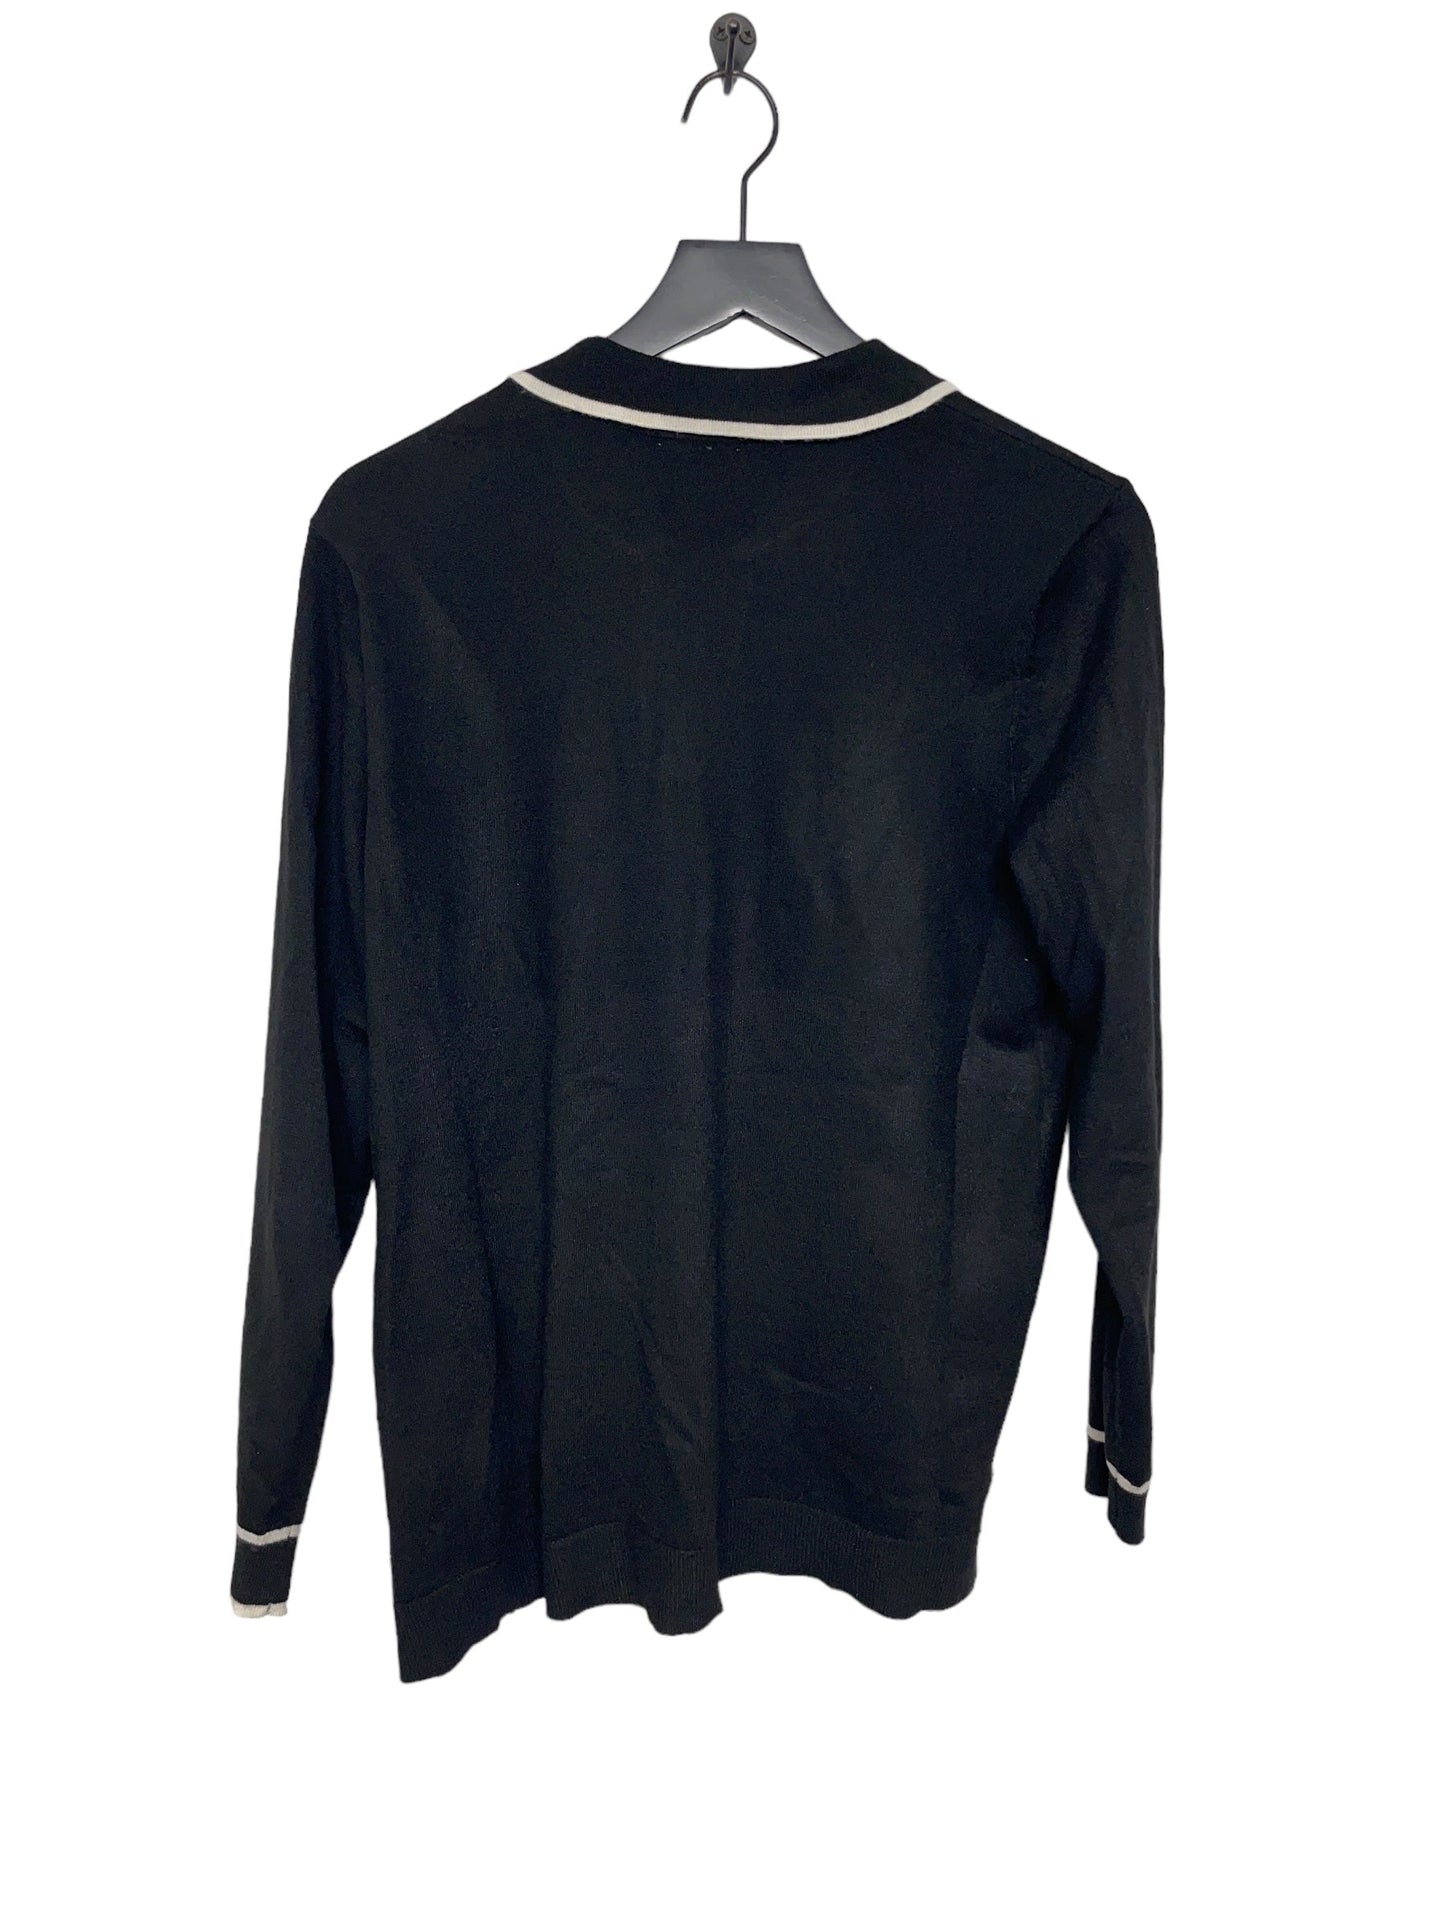 Black Sweater Joan Rivers, Size L